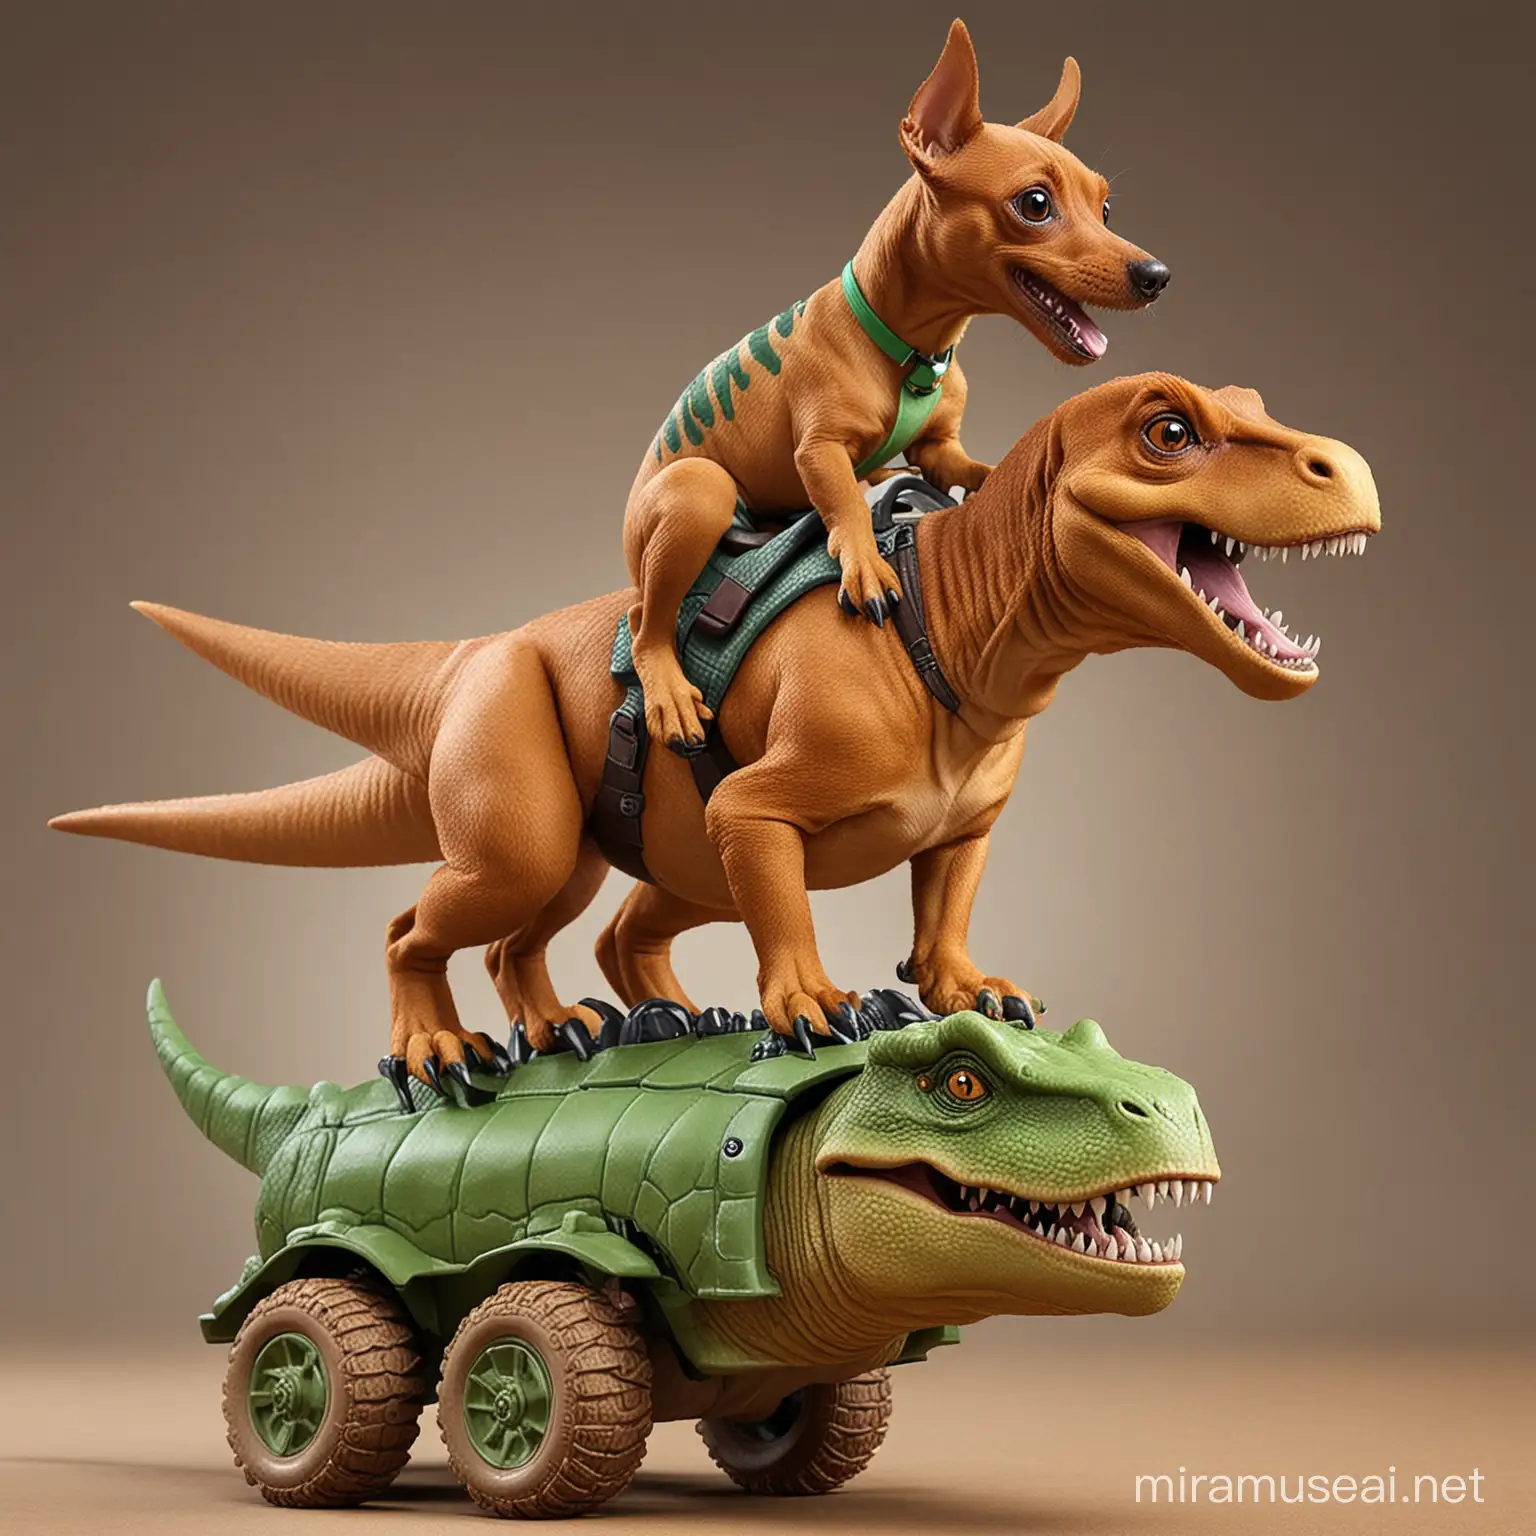 Light brown pinscher riding a t-Rex. The T-Rex looks like a T-Rex and is green. Not like a dog